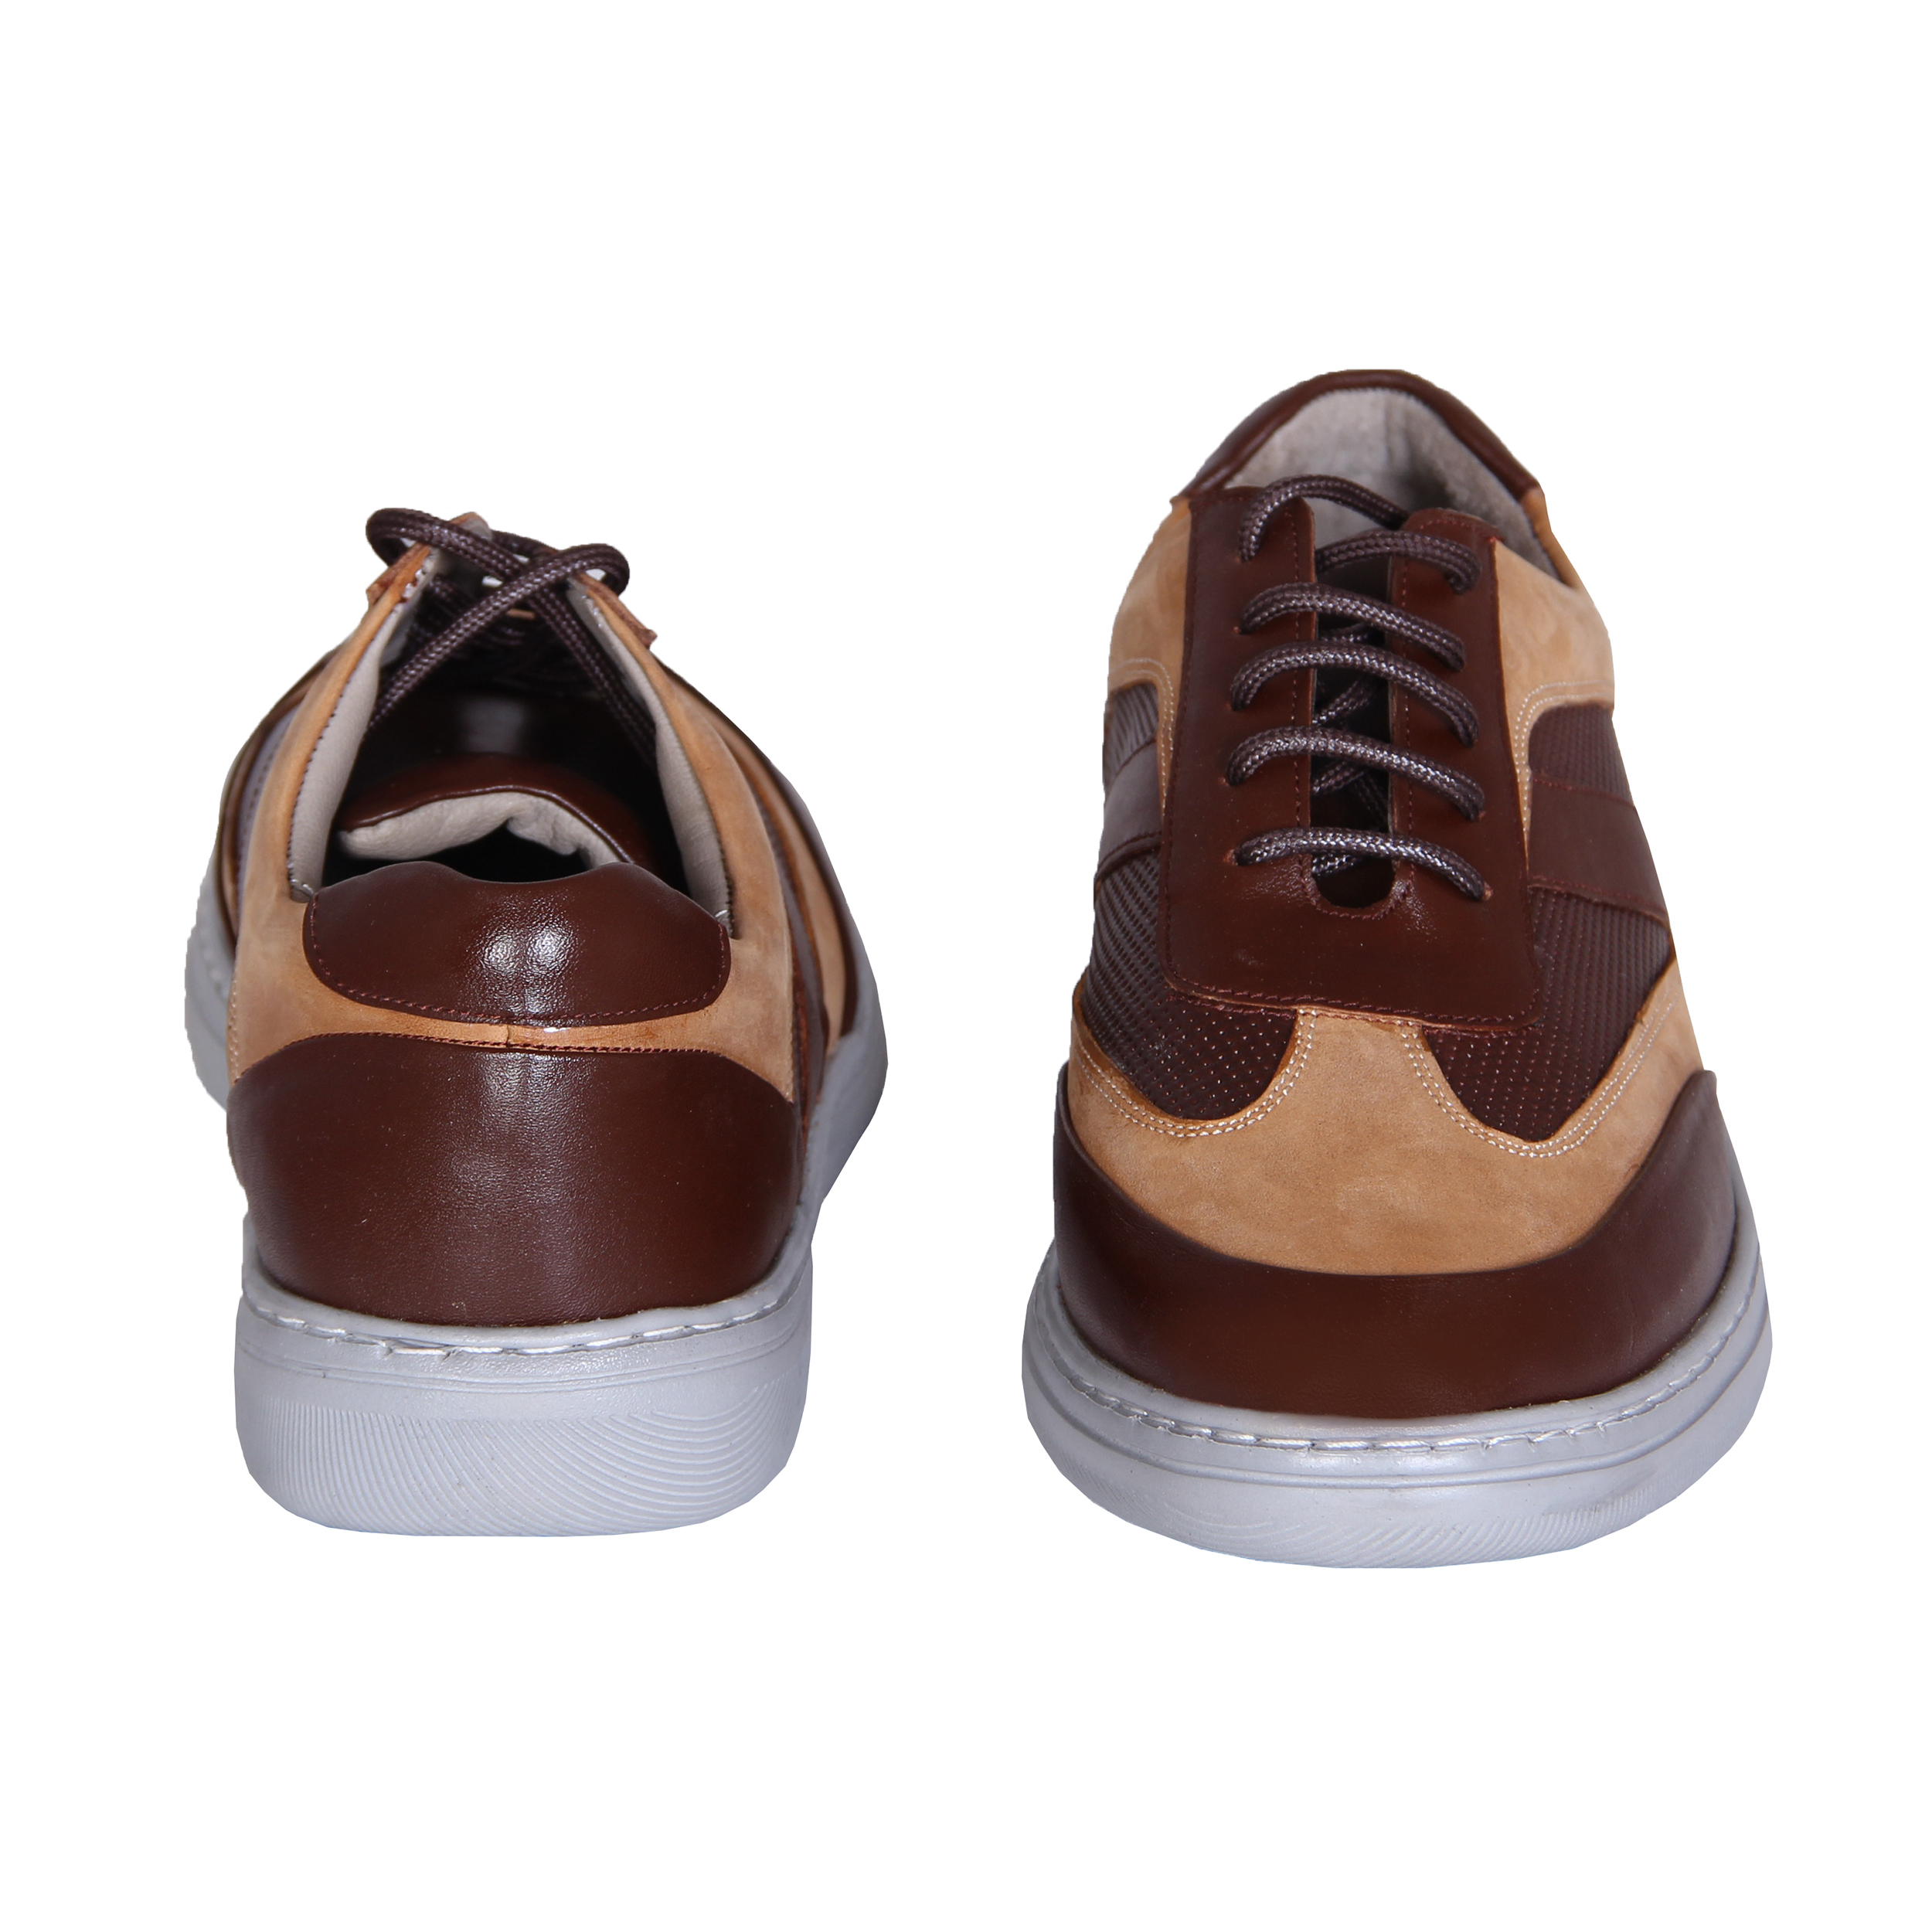 SHAHRECHARM men's casual shoes , F6024-66 Model